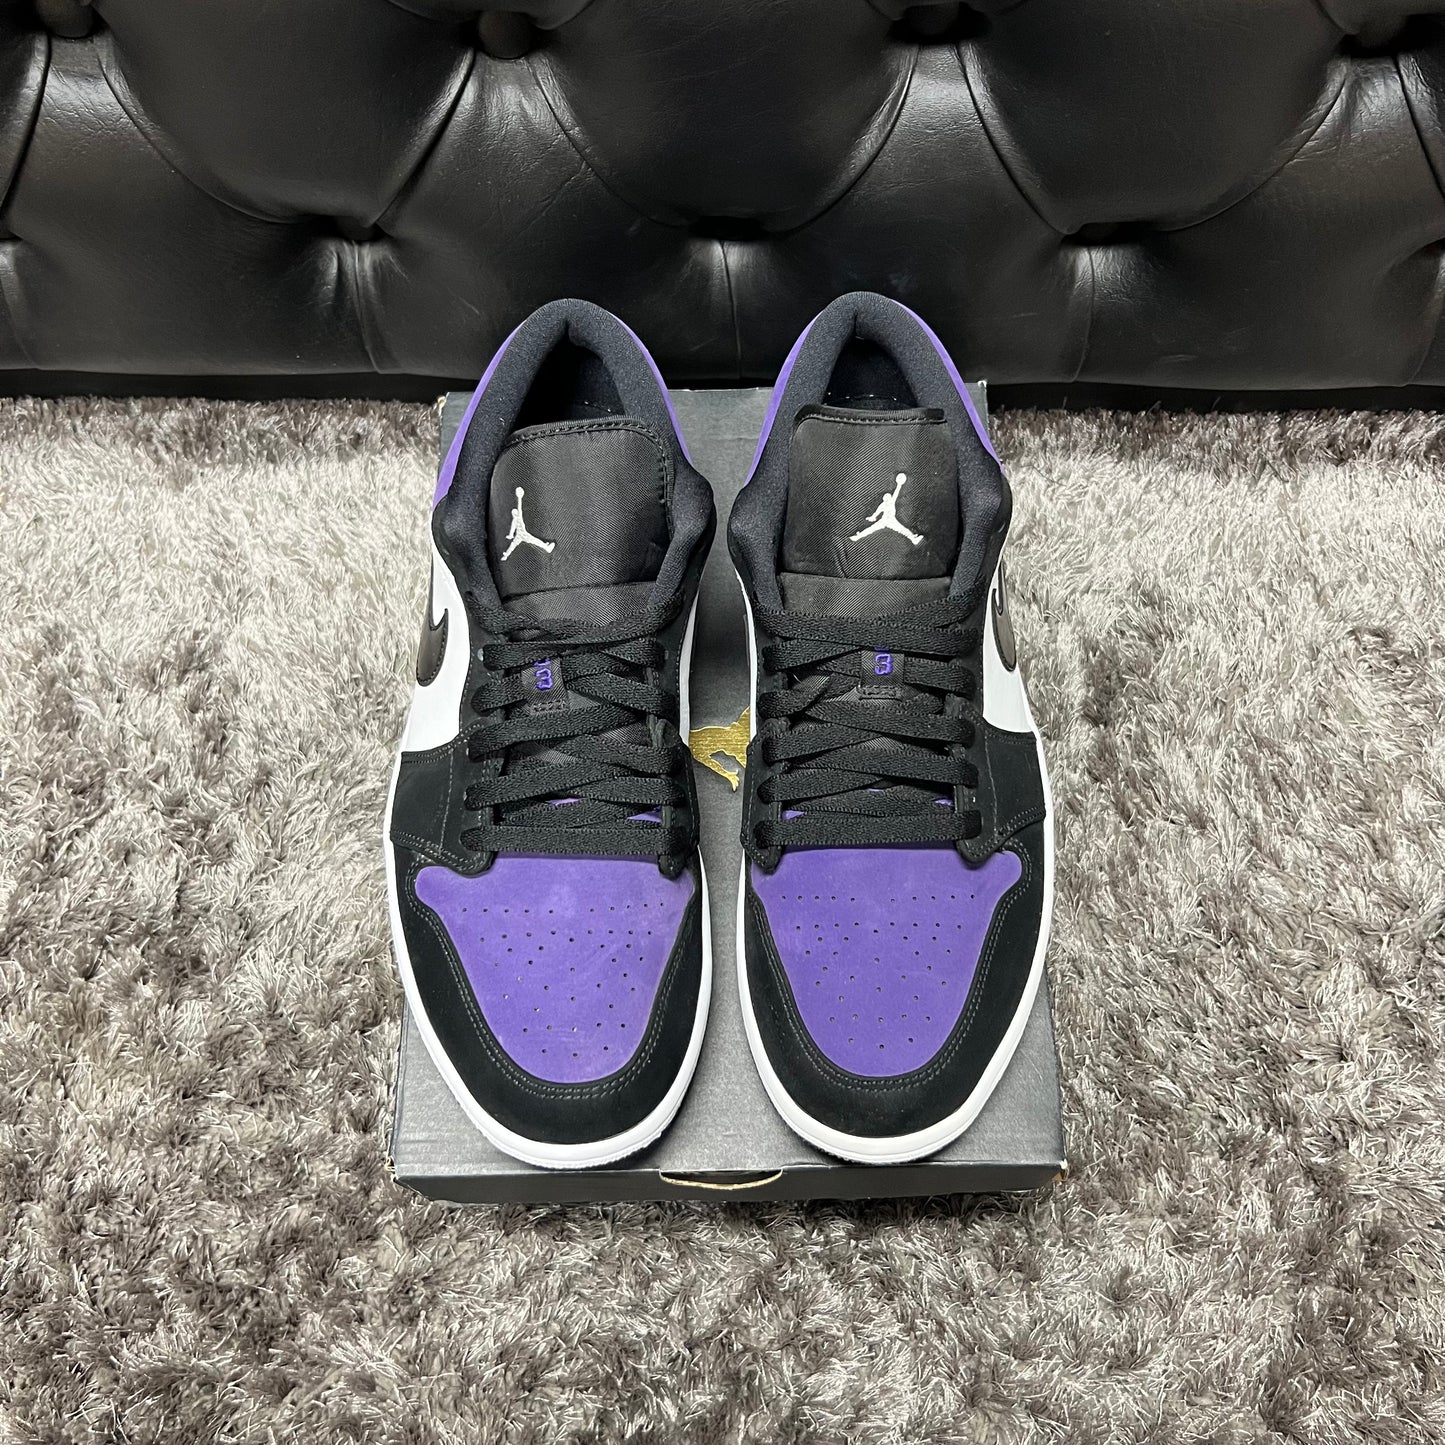 Jordan 1 Low Court Purple size 11 used